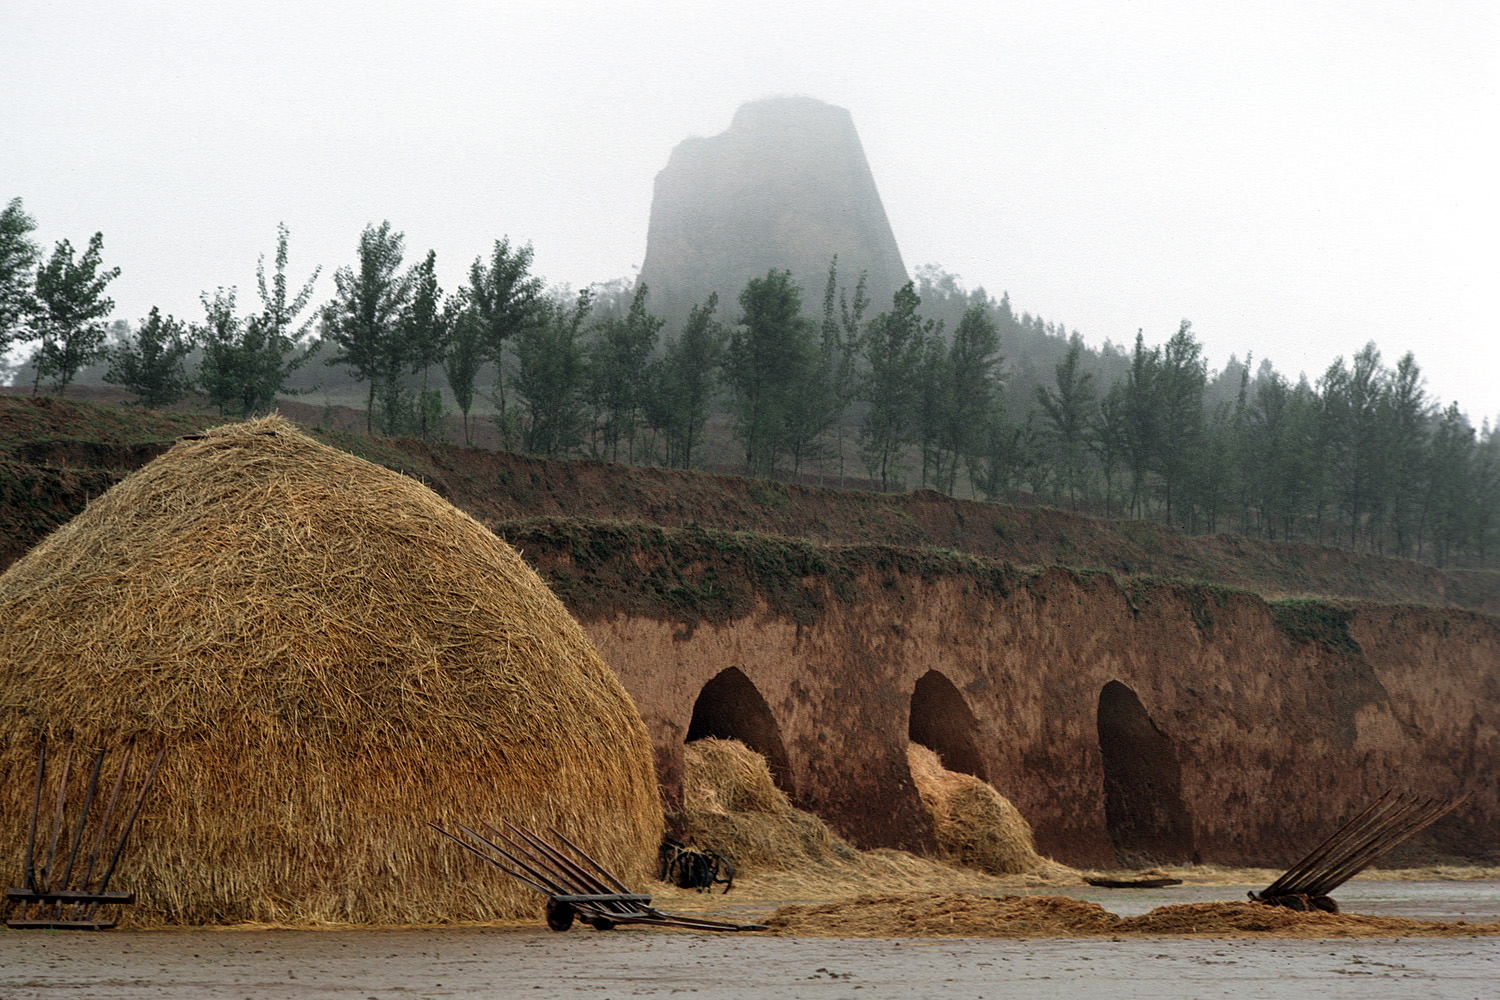 bill-hocker-earthen-barns-xi'an-shaanxi-china-1981